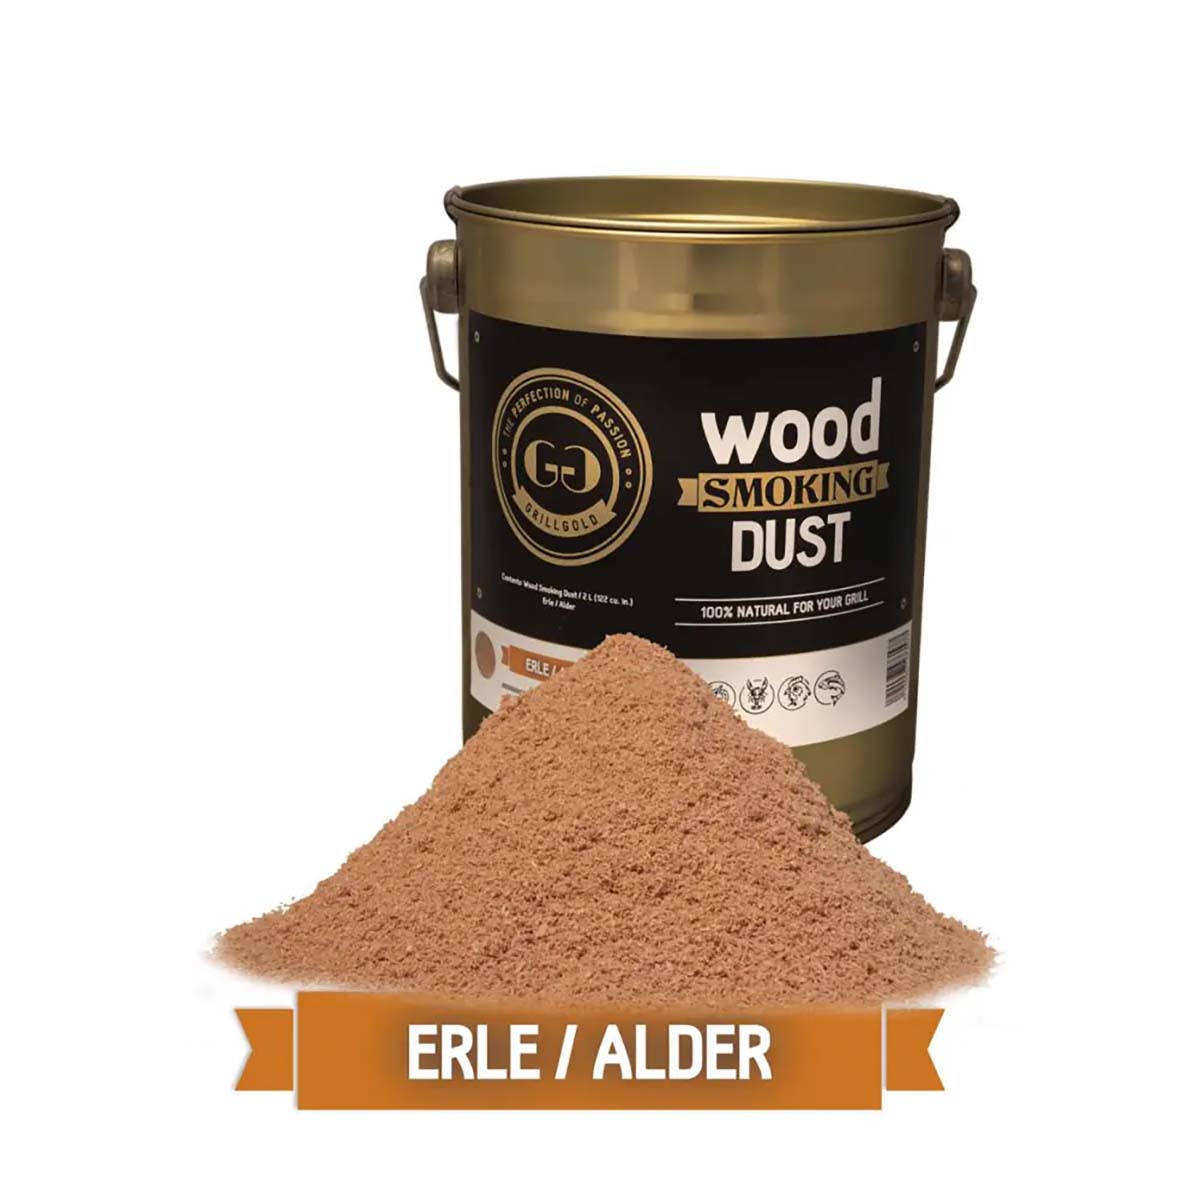 Grillgold Wood Smoking Dust / Erle / 2 Liter  (122 cu. in.)